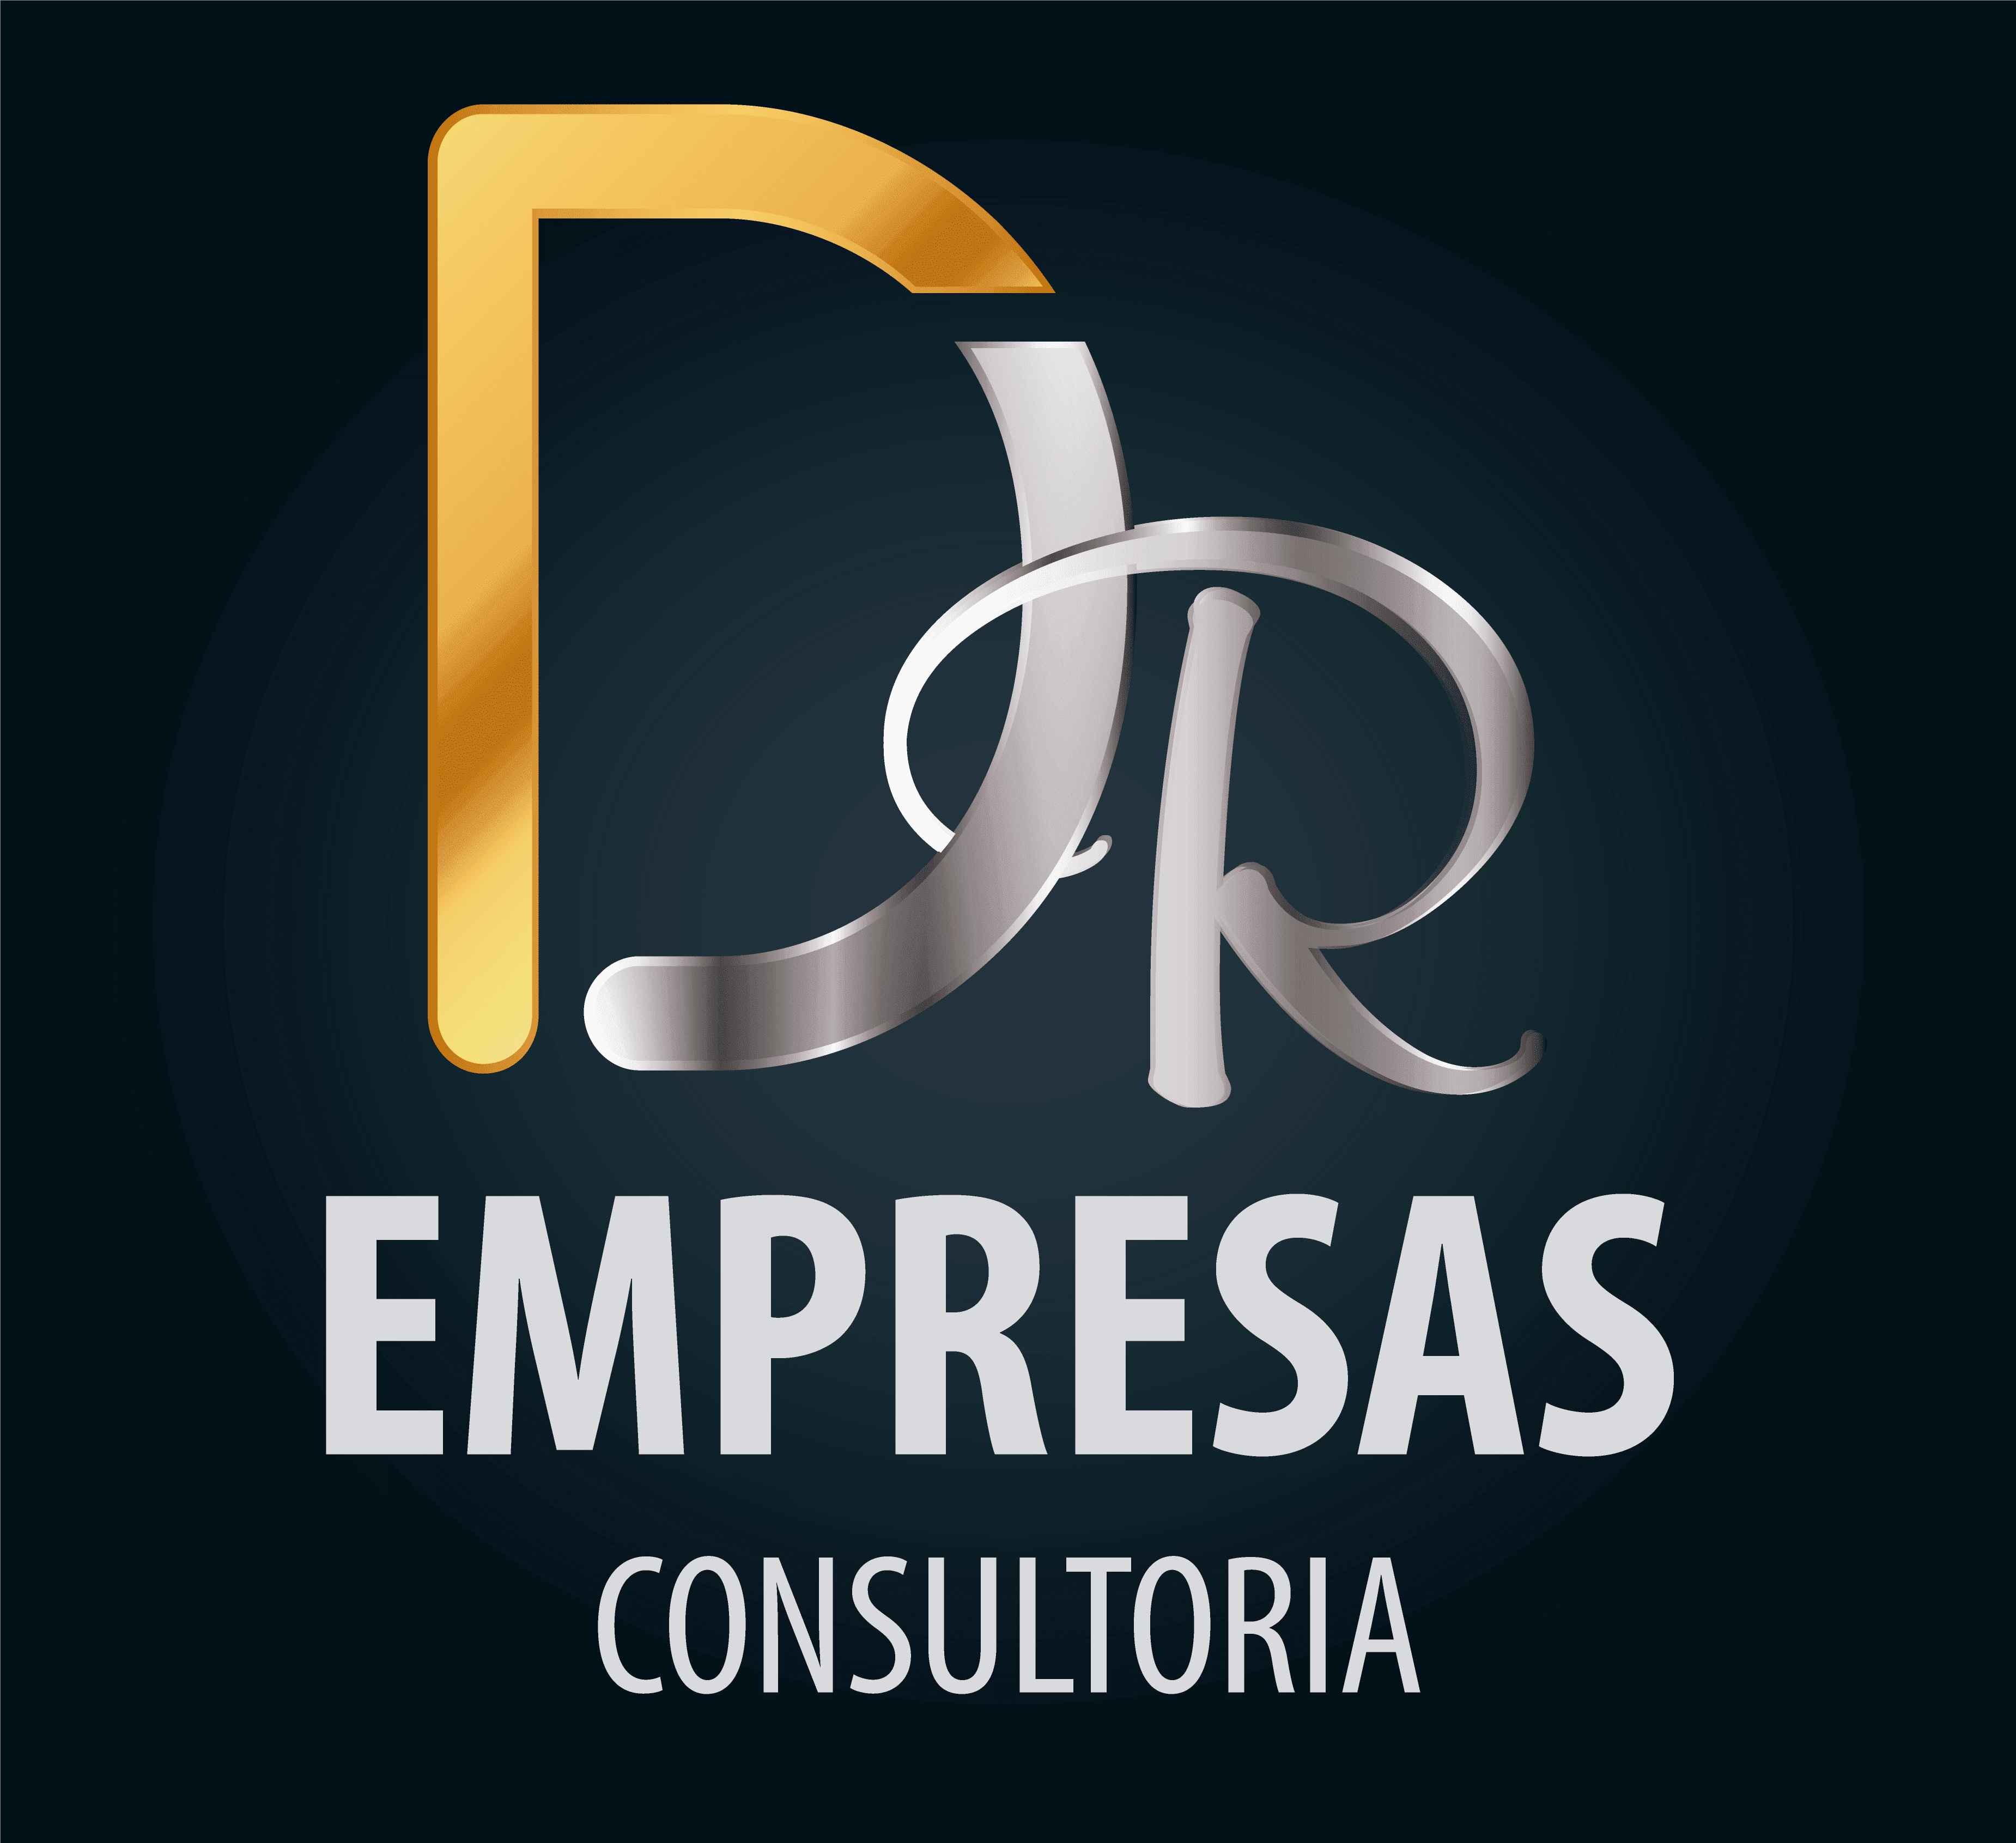 DR. EMPRESAS - CONSULTORIA